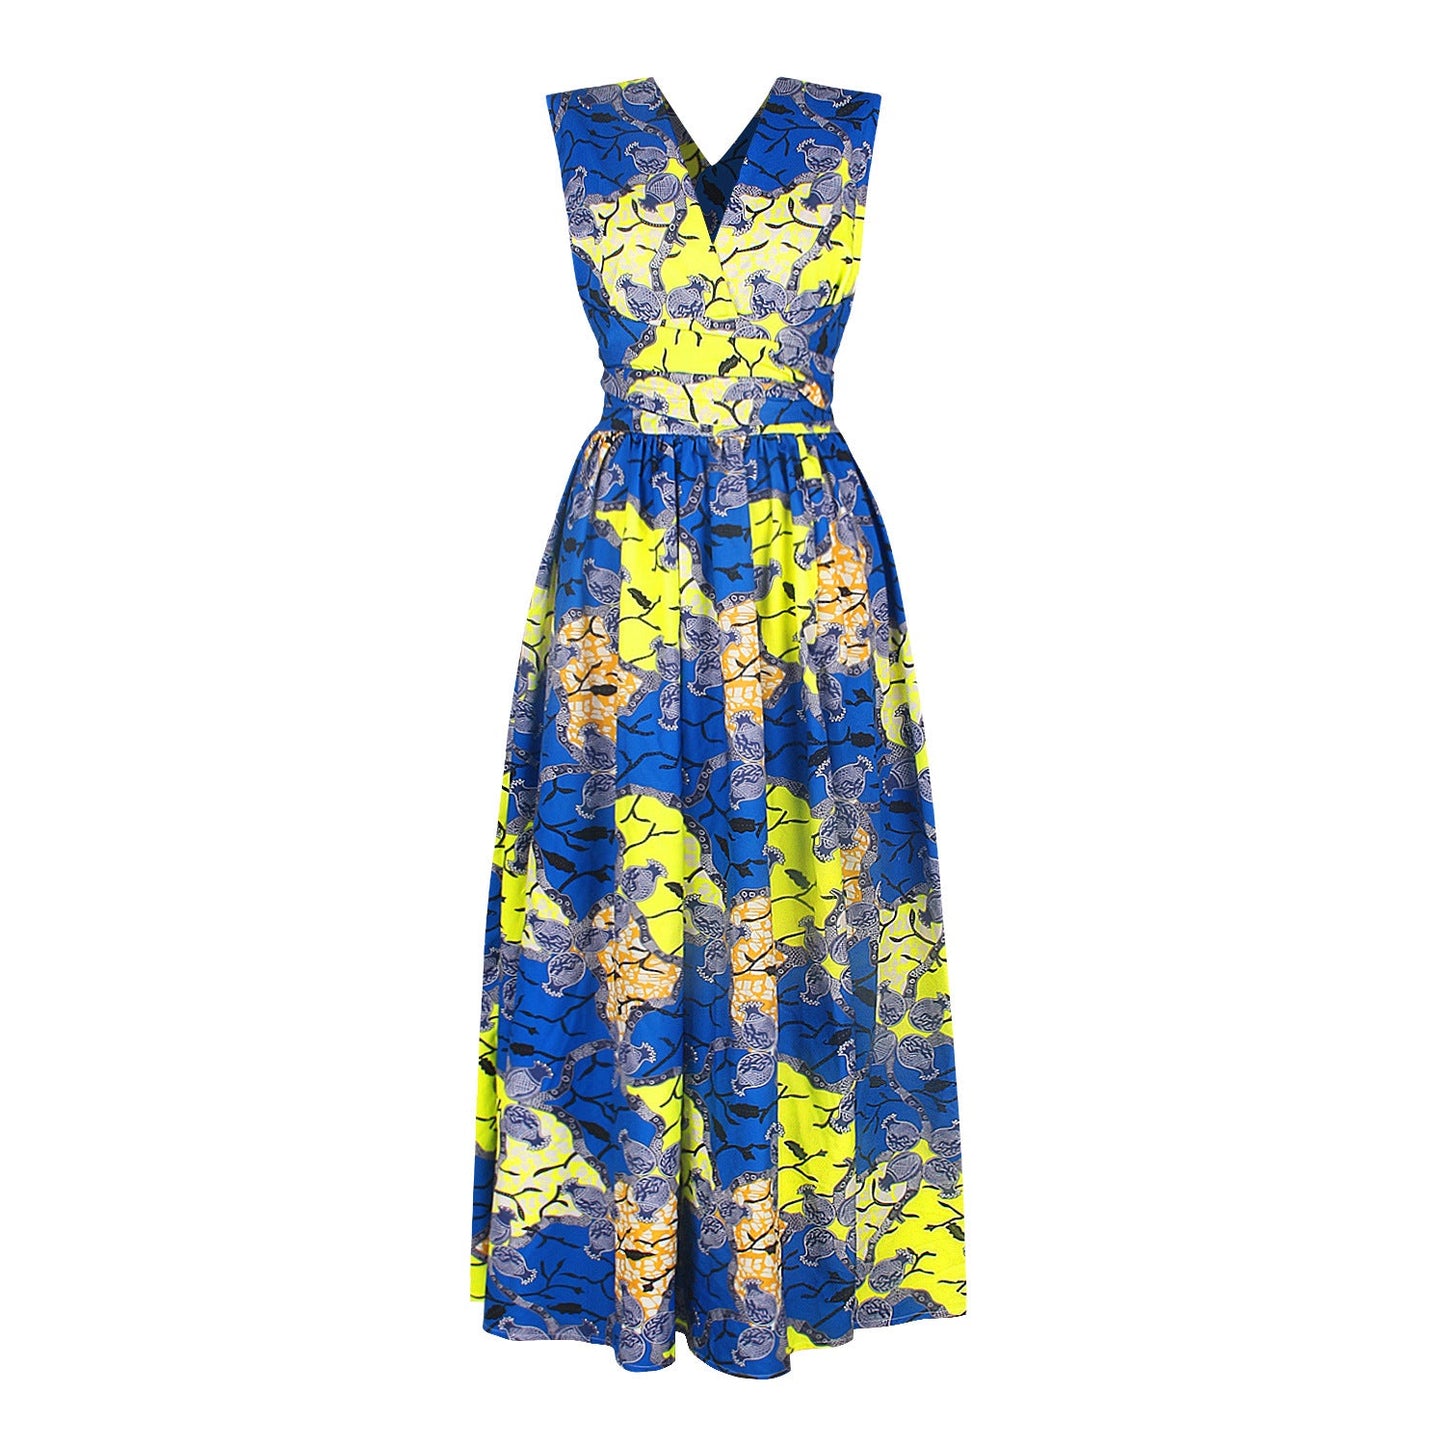 Summer Digital Print Lace Dress